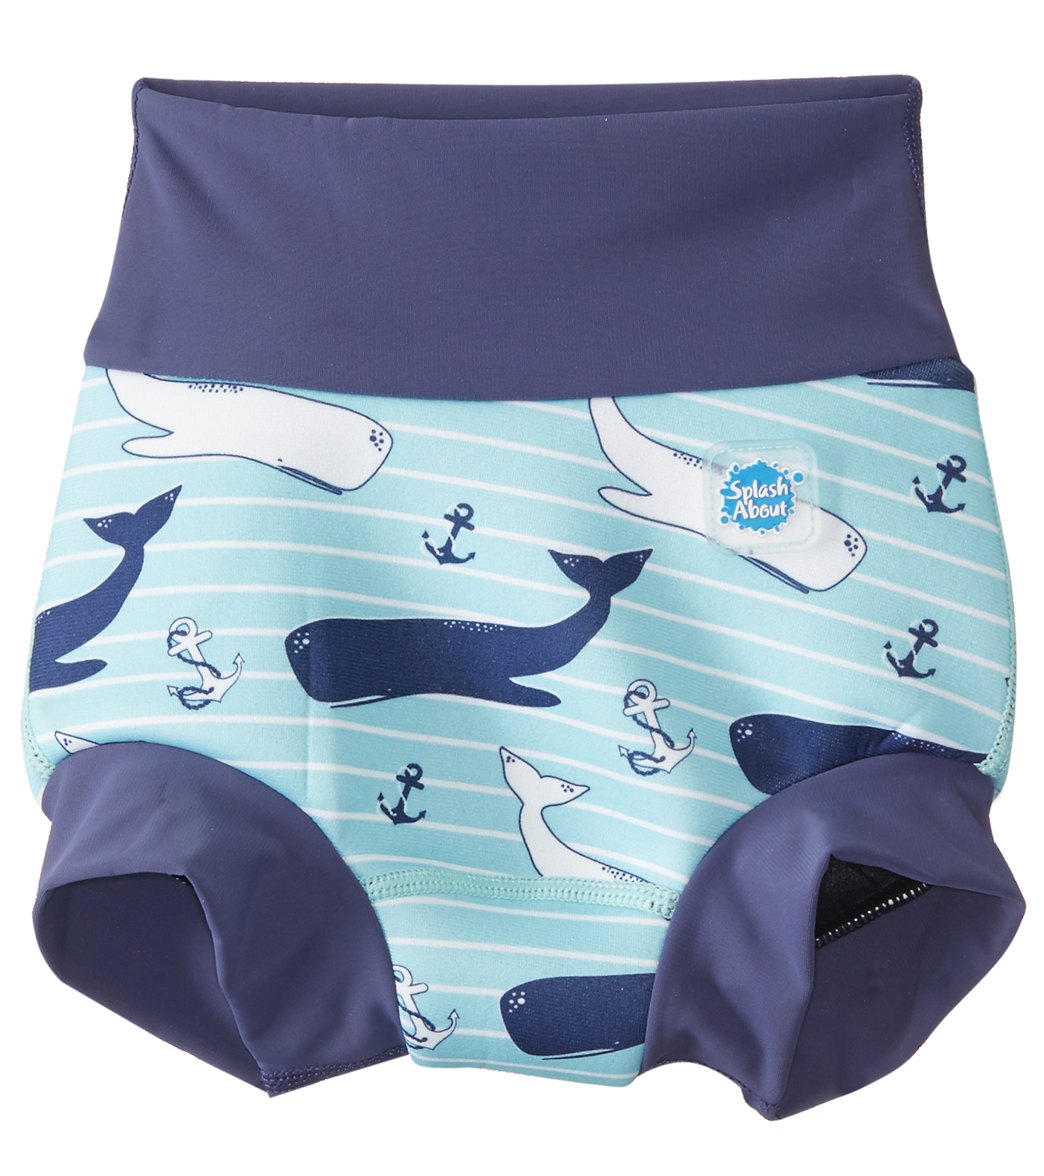 Splash About New Improved Happy Nappy Swim Diaper 3 Months-3T - Vintage Moby Medium 3-6 Months - Swimoutlet.com